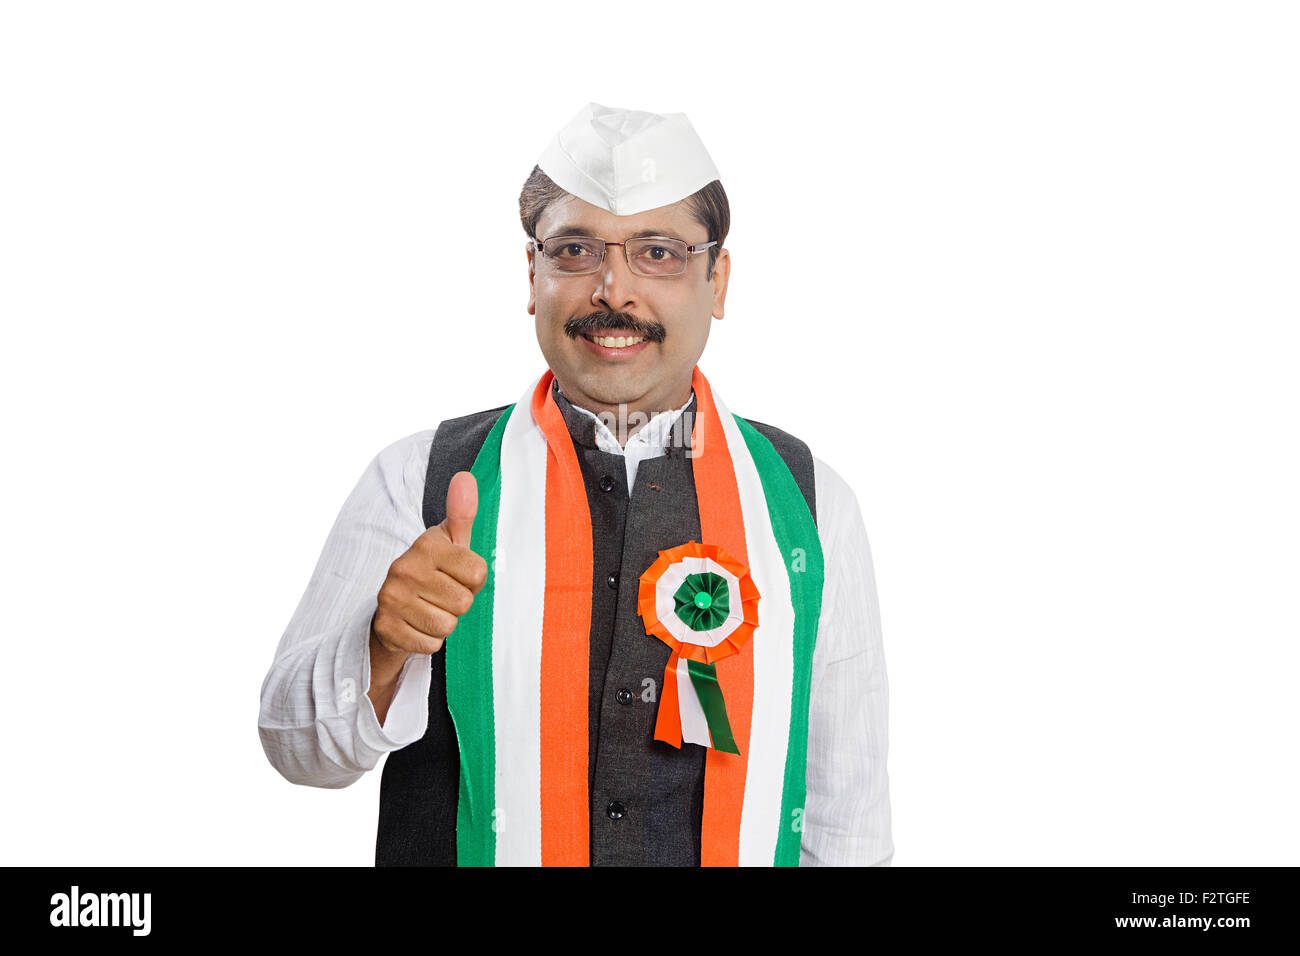 1 adultes indiens politicien homme Thumbs Up montrant Banque D'Images